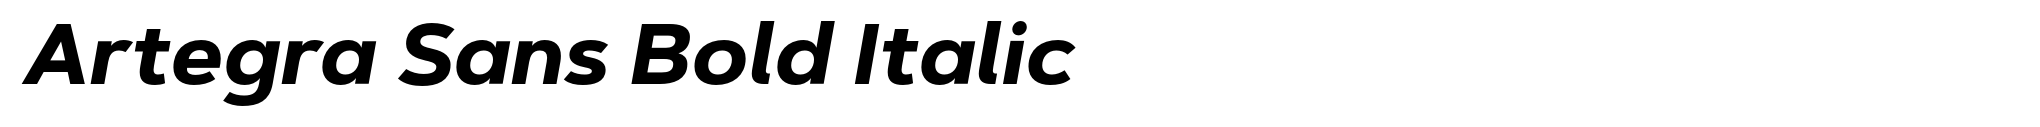 Artegra Sans Bold Italic image